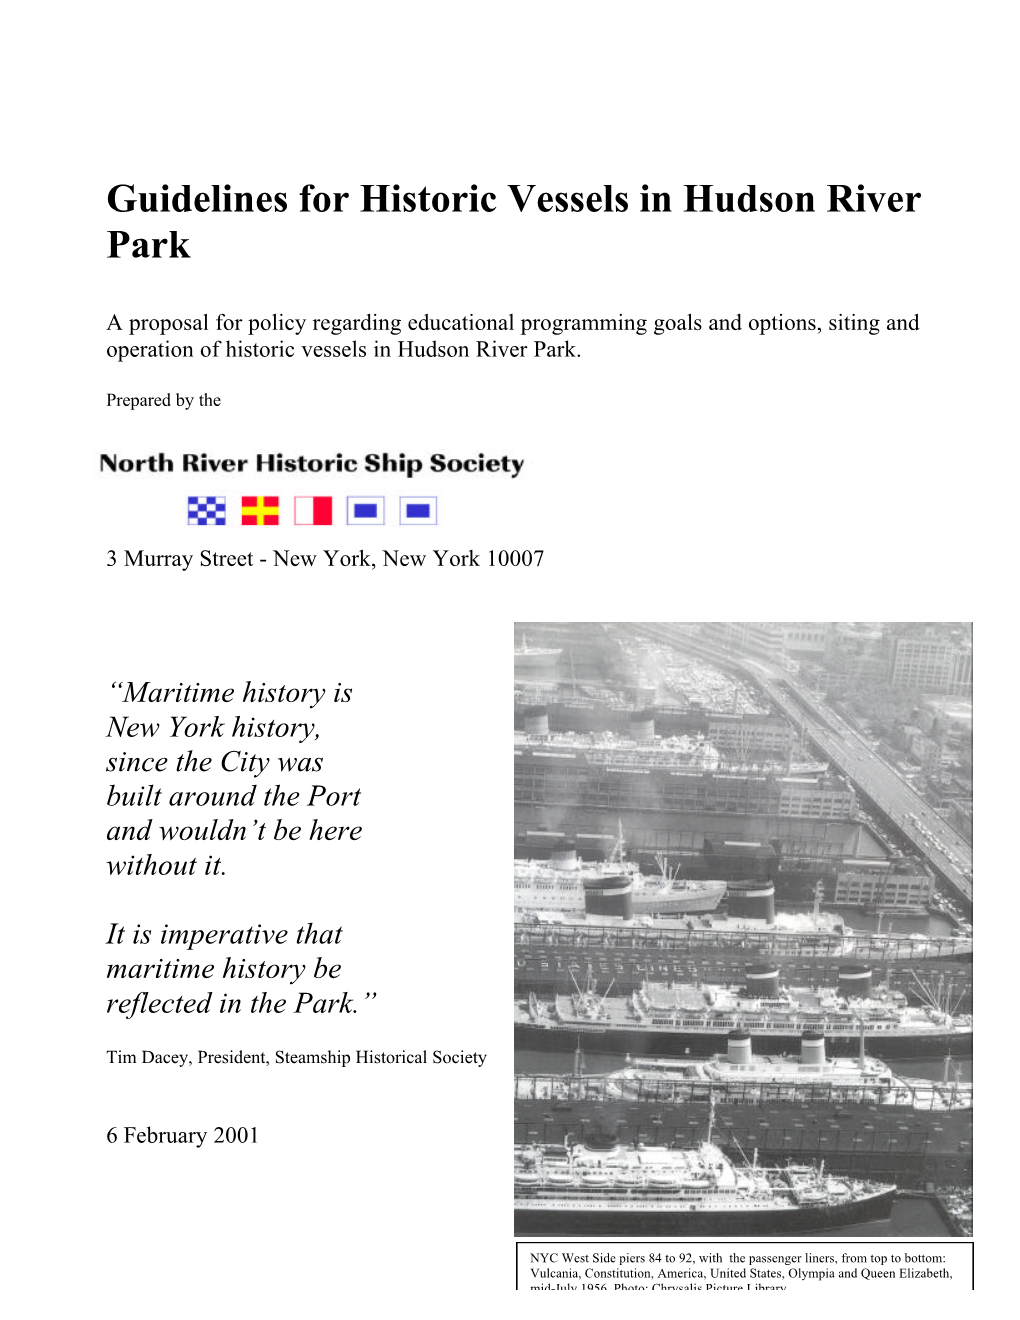 Guidelines for Historic Vessels in Hudson River Park